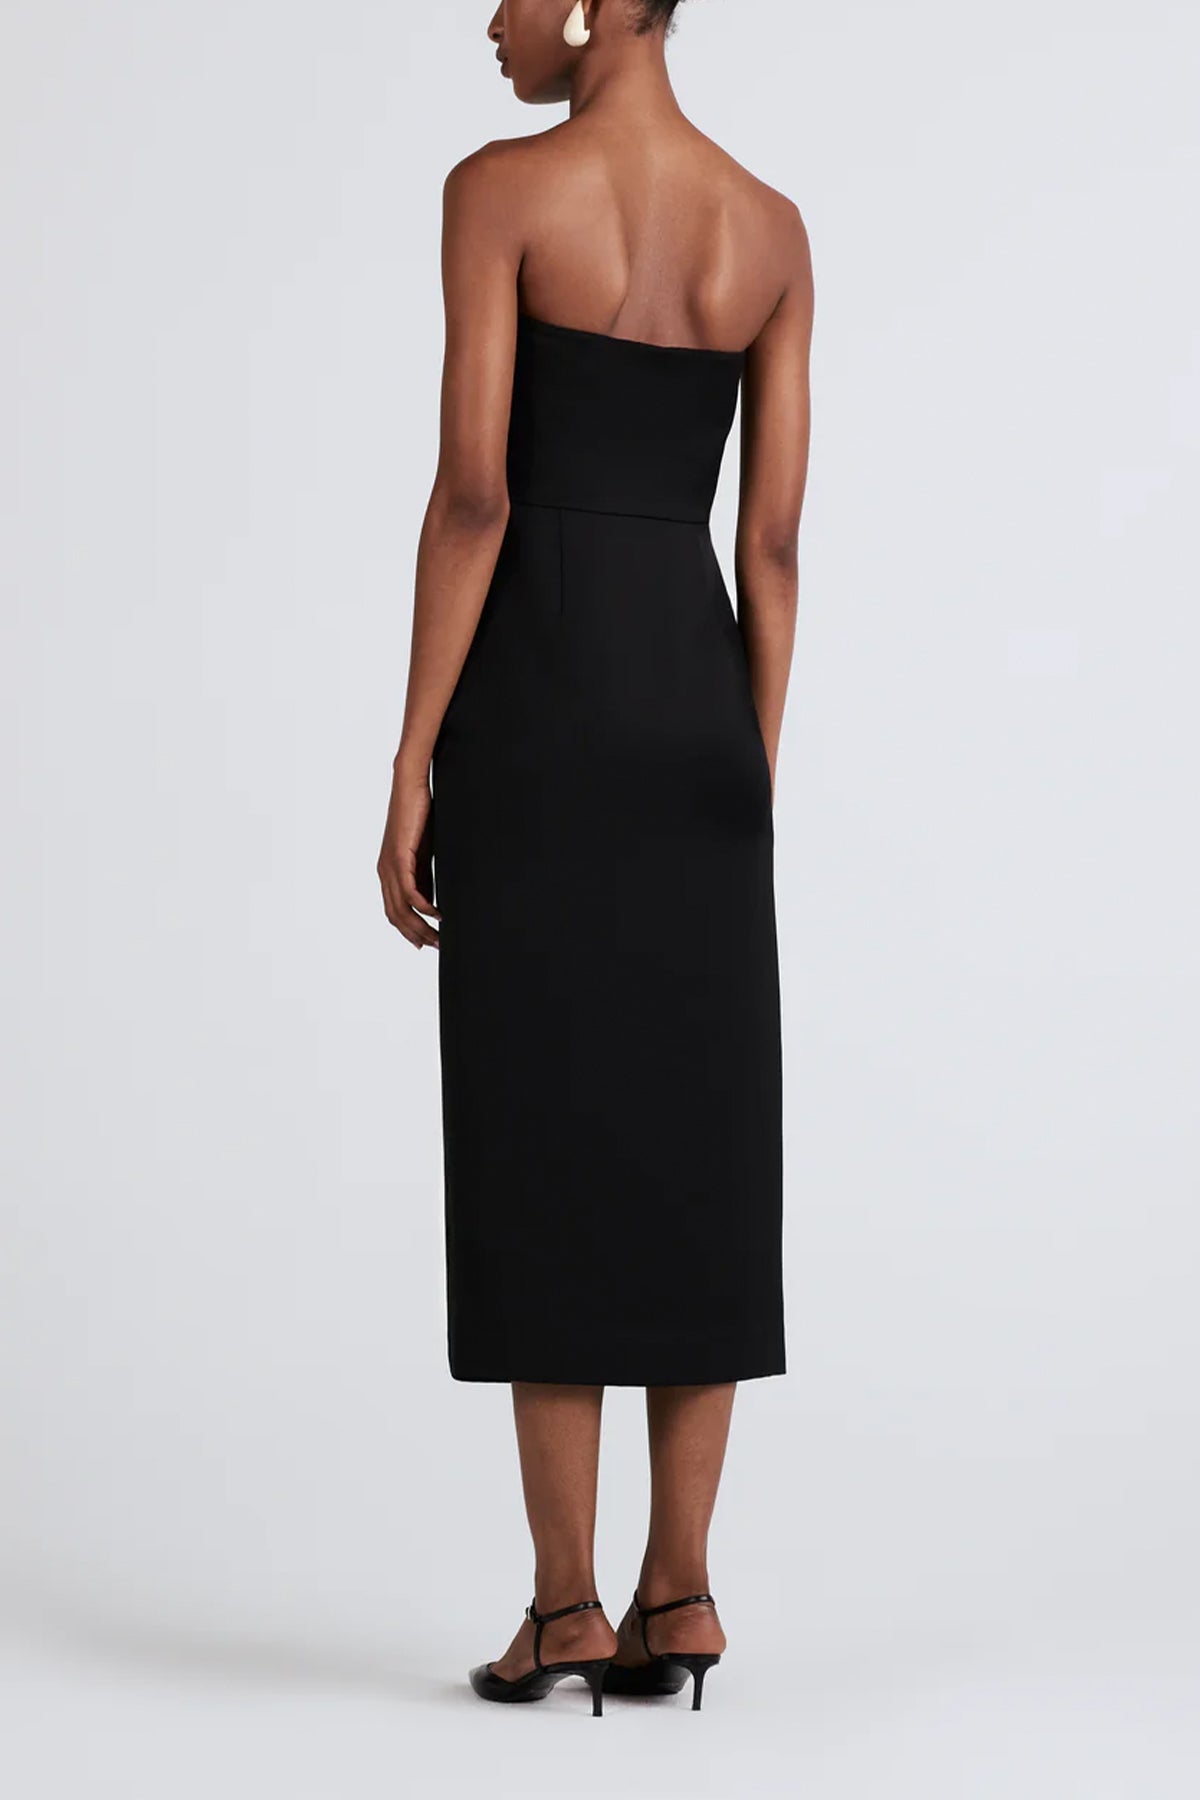 Harriet Strapless Midi Dress in Black - shop-olivia.com